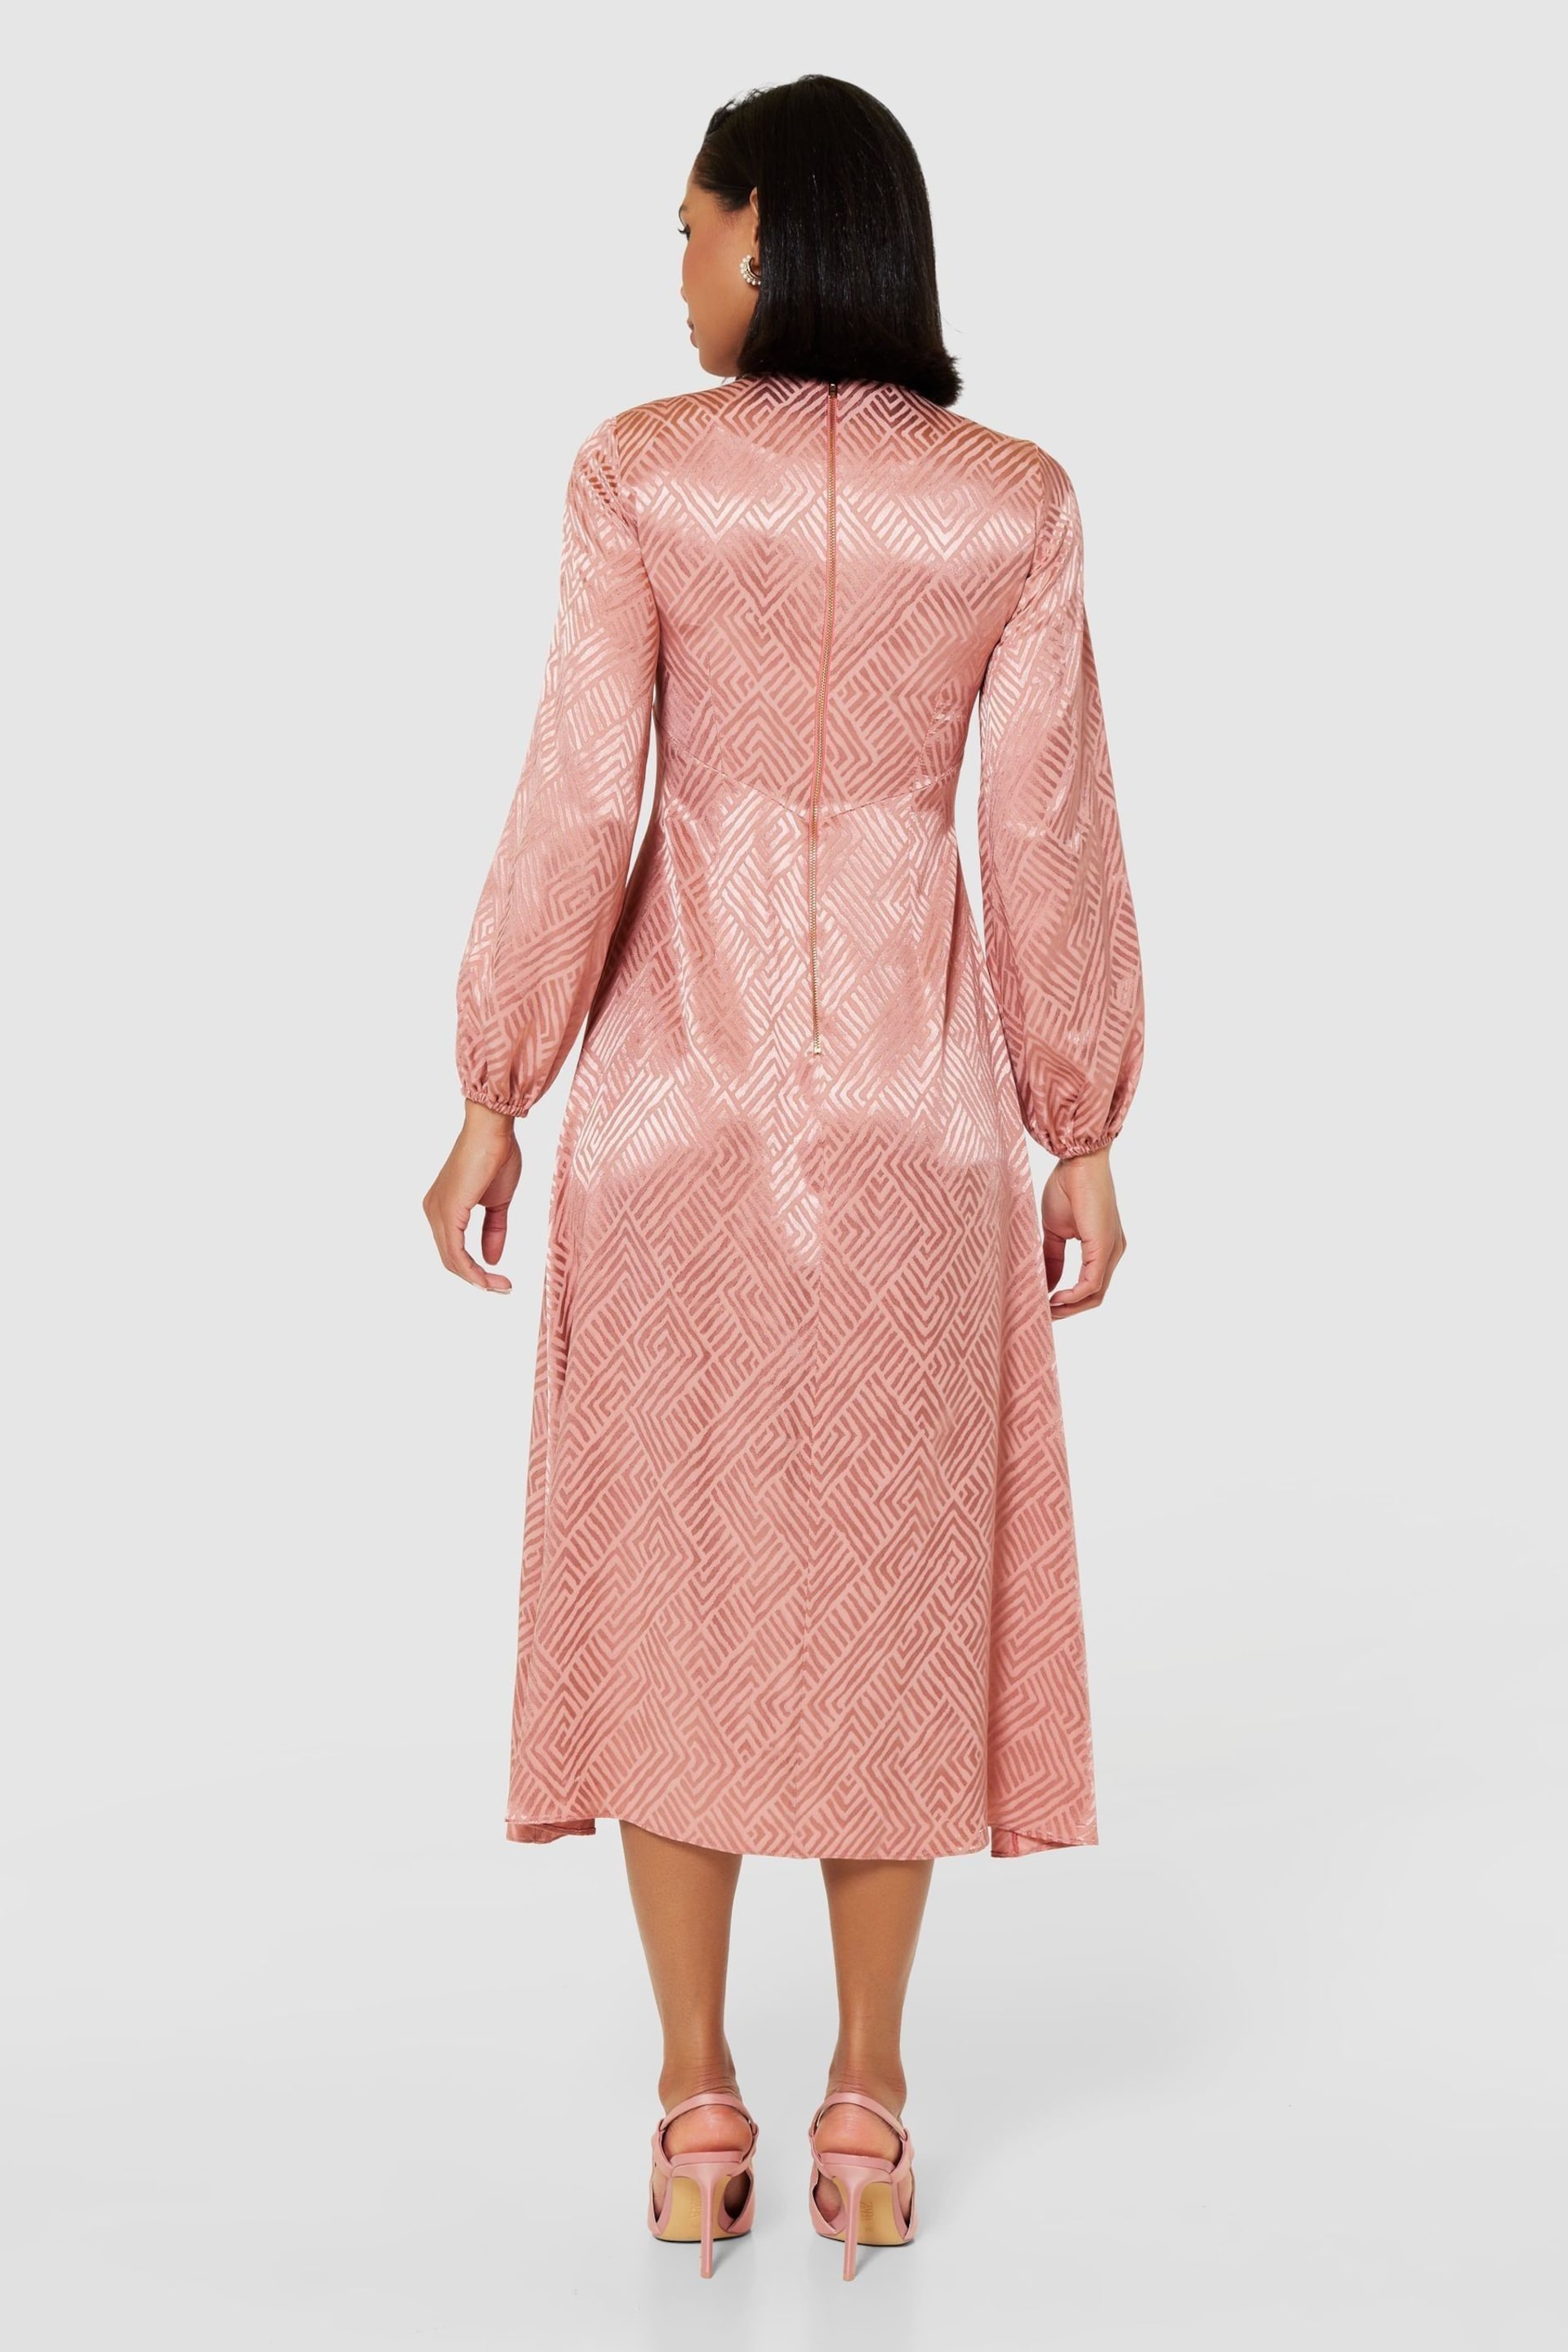 Closet London Pink Midi A-Line Dress - Image 2 of 5